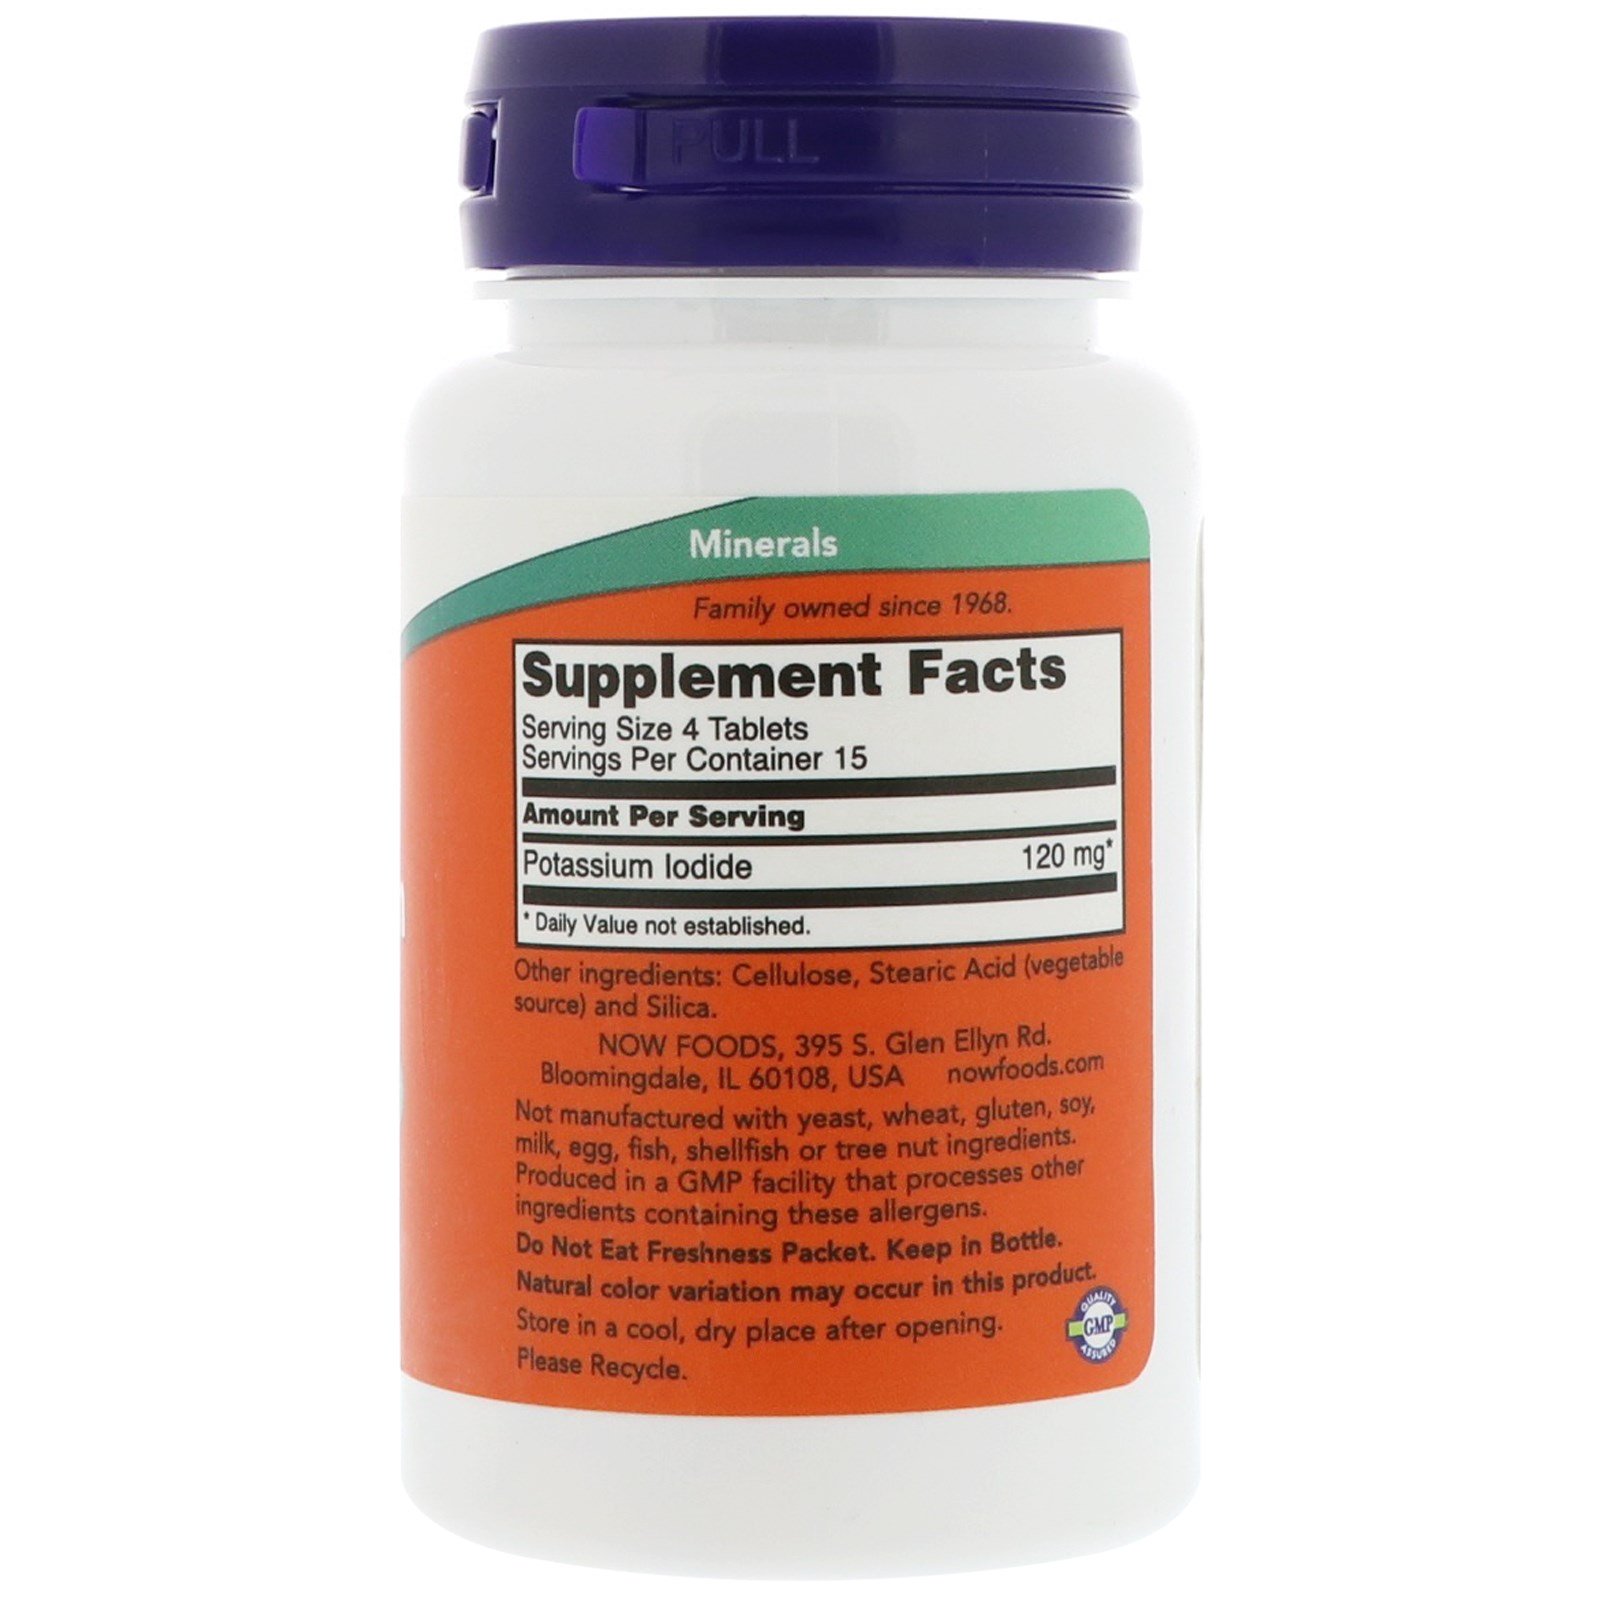 Potassium Iodide, Калий Йодид 30 мг - 60 таблеток